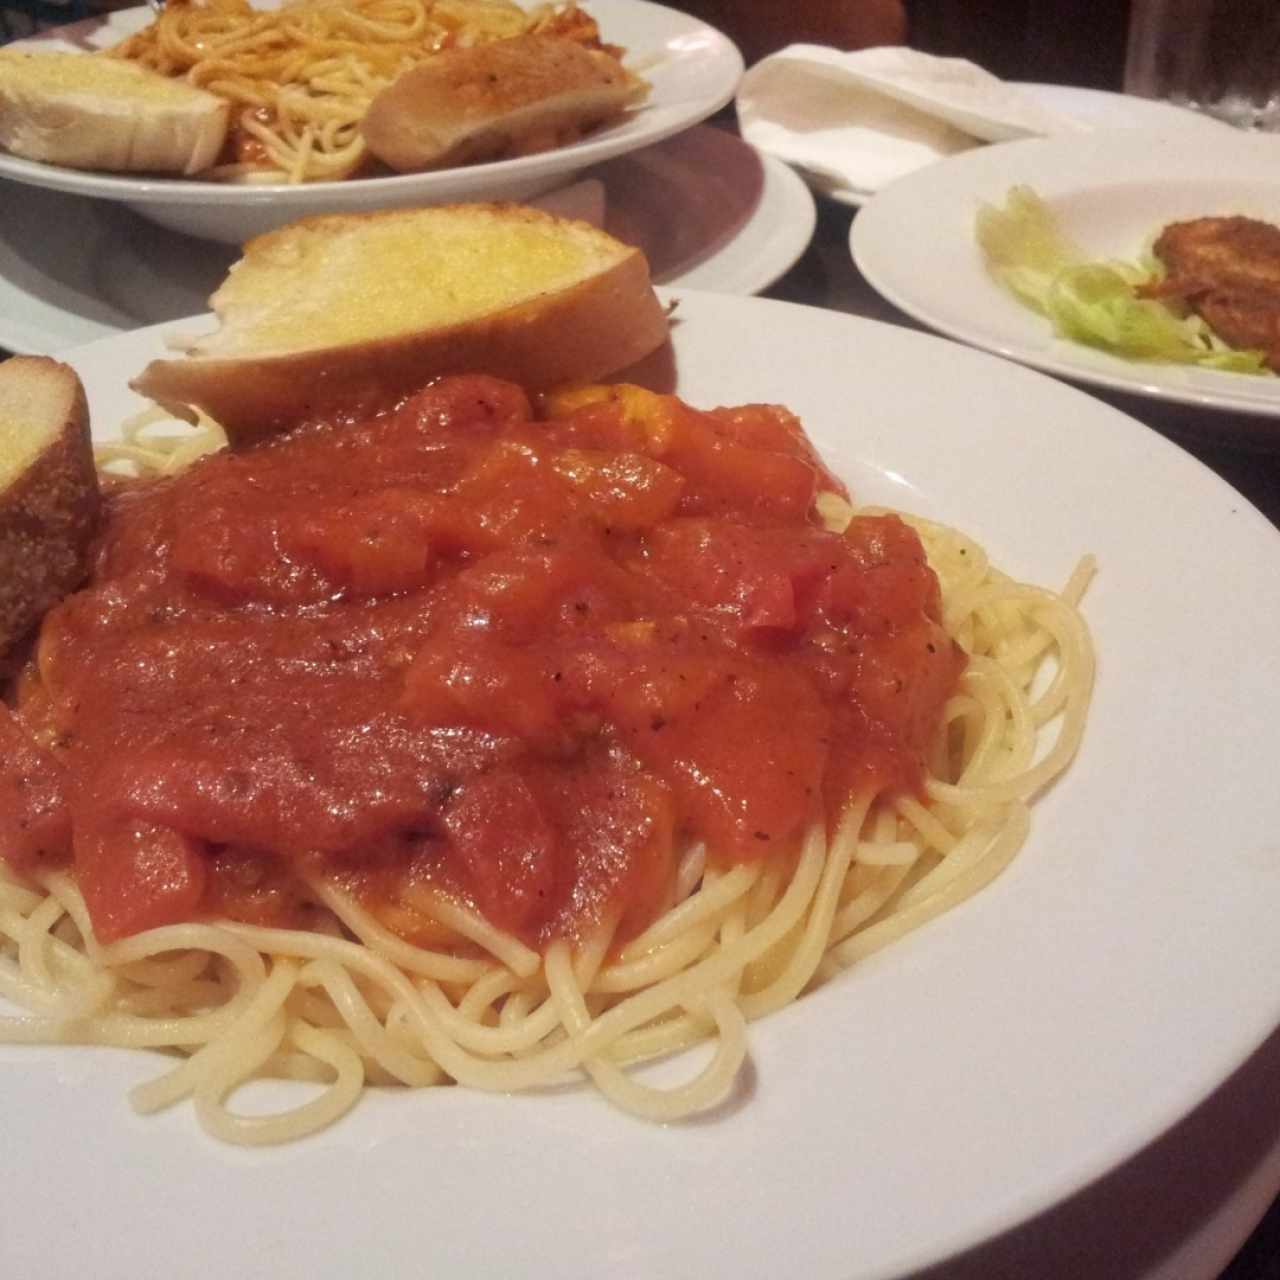 Pastas - Spaghetti Pomodoro